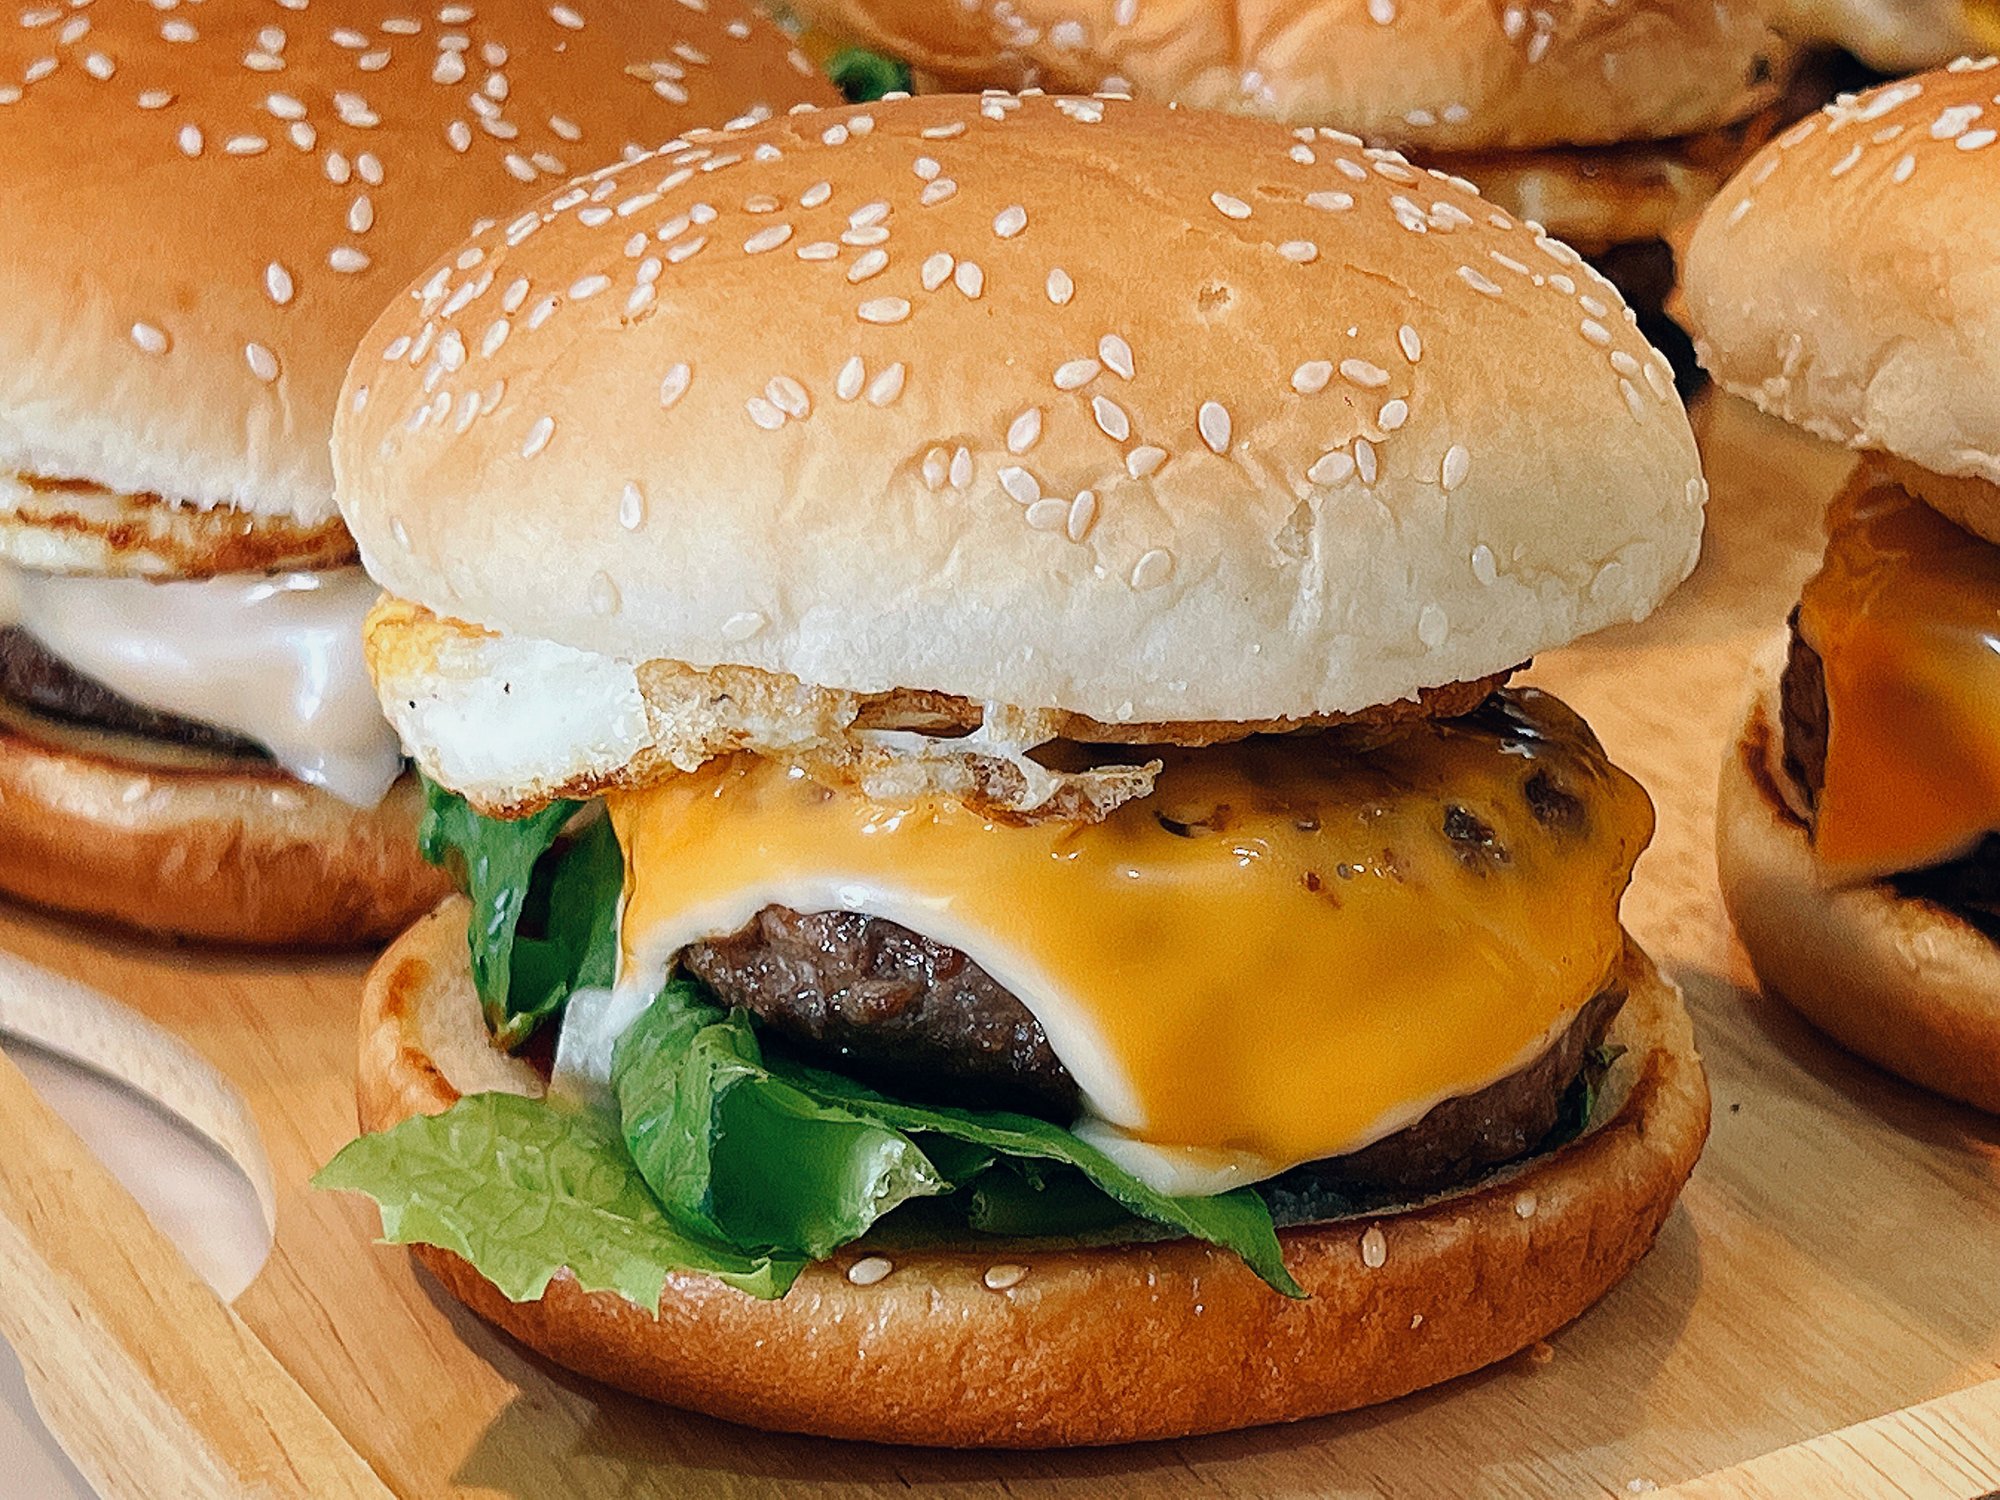 A close-up of a hamburger